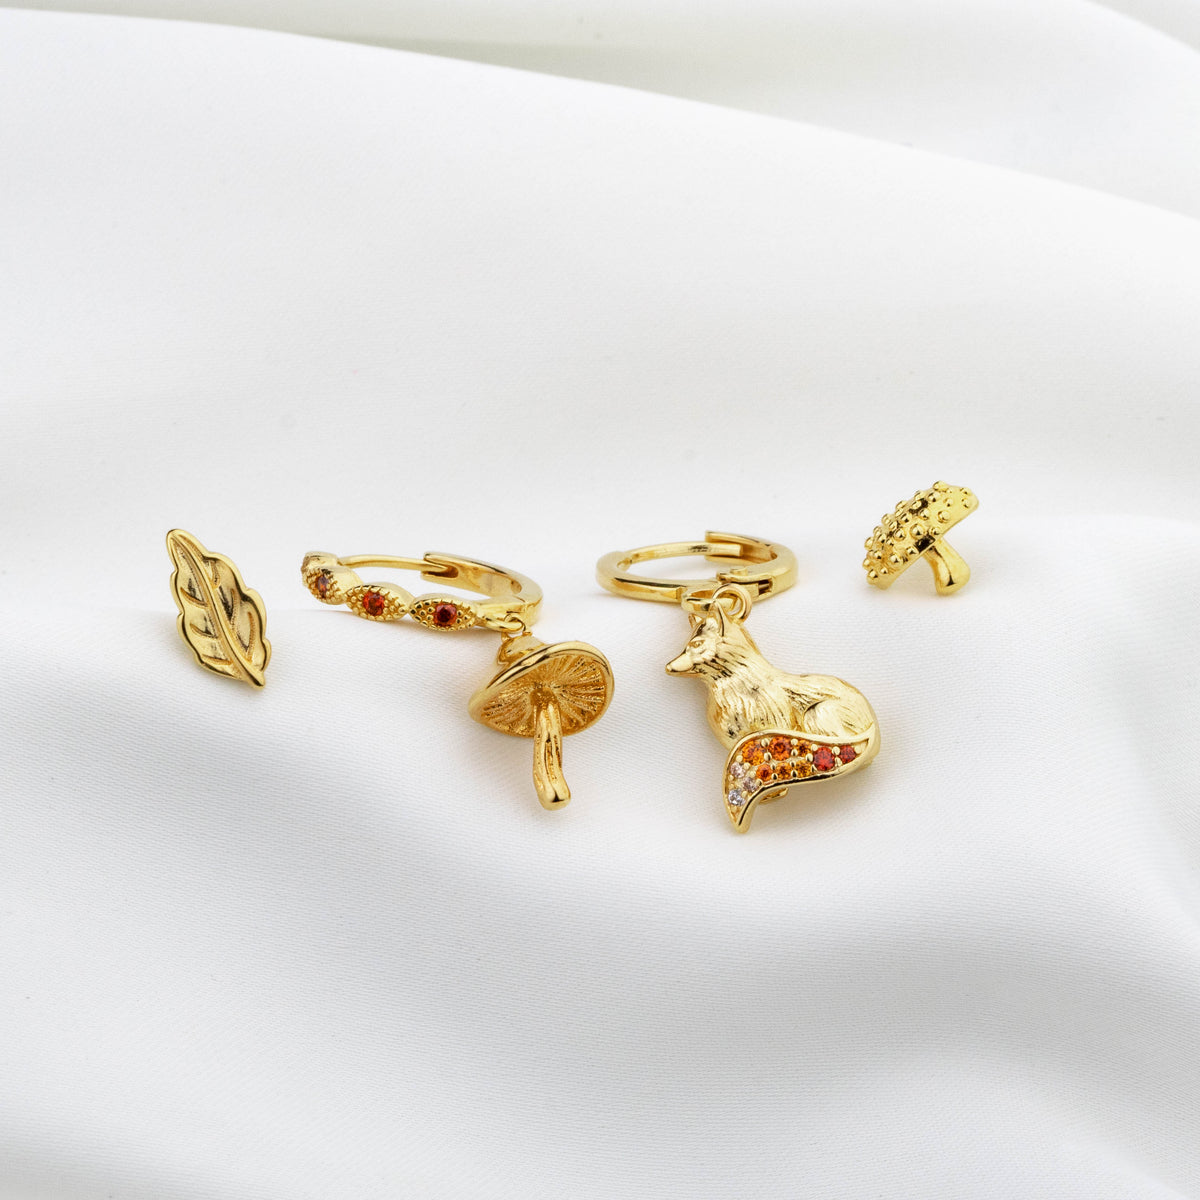 1gram gold baby earring for girl and baby flower type